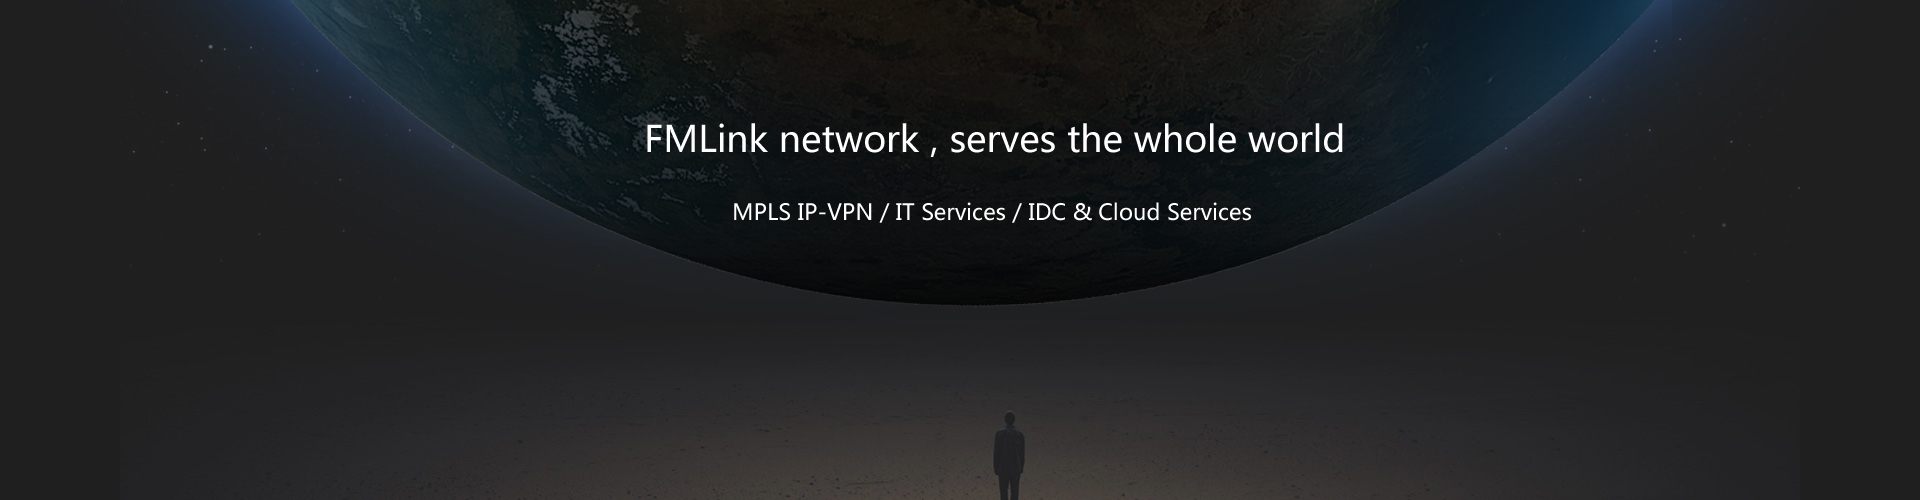 FMLink network , serves the whole world